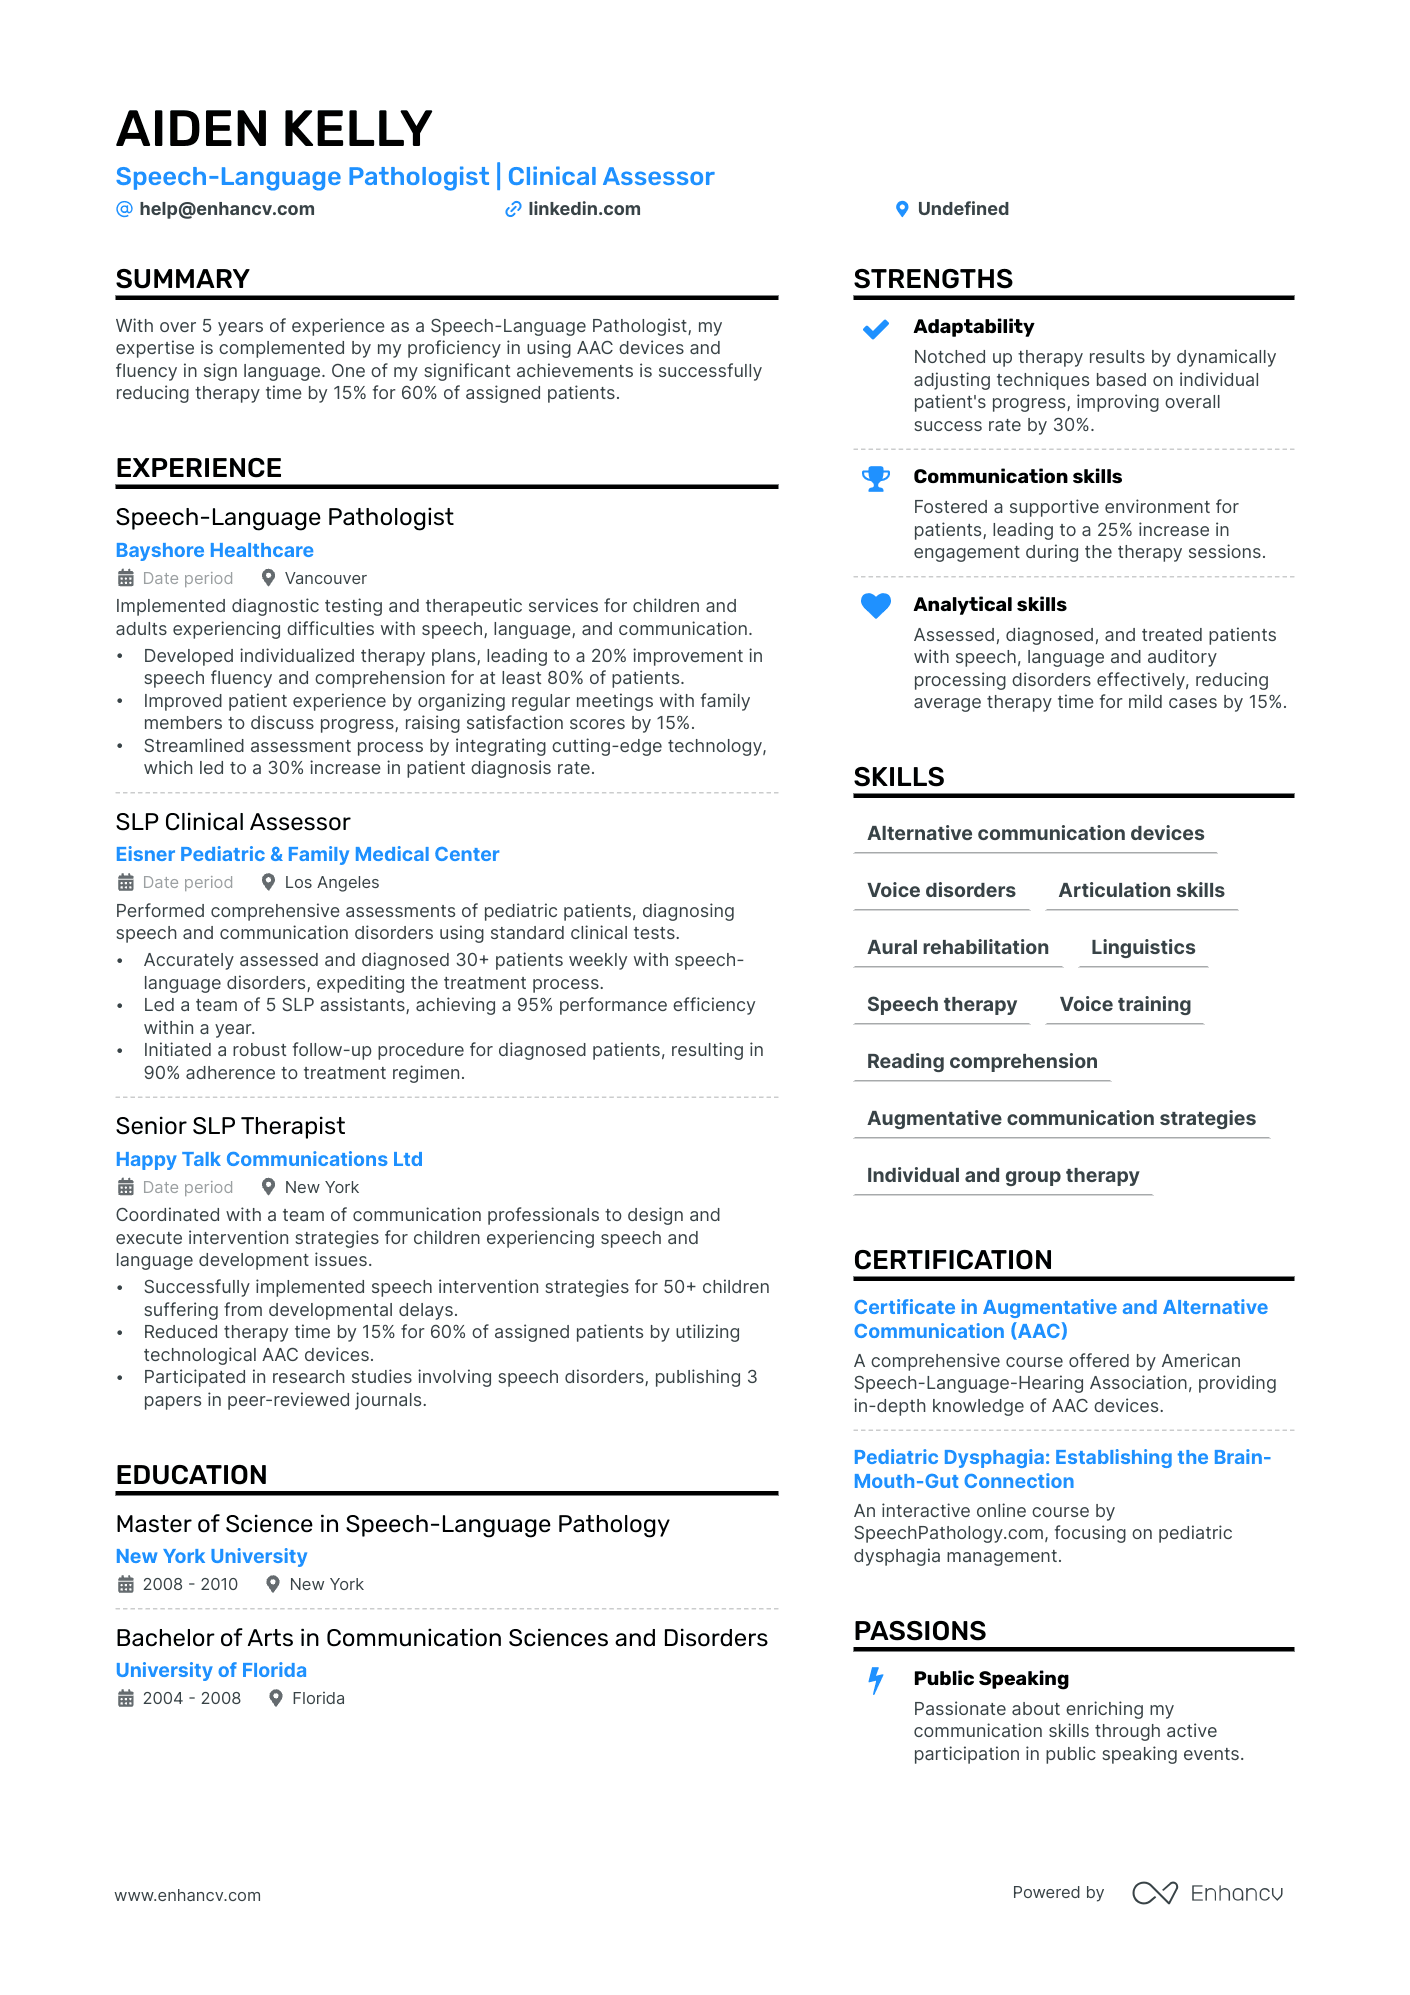 slp grad school resume examples